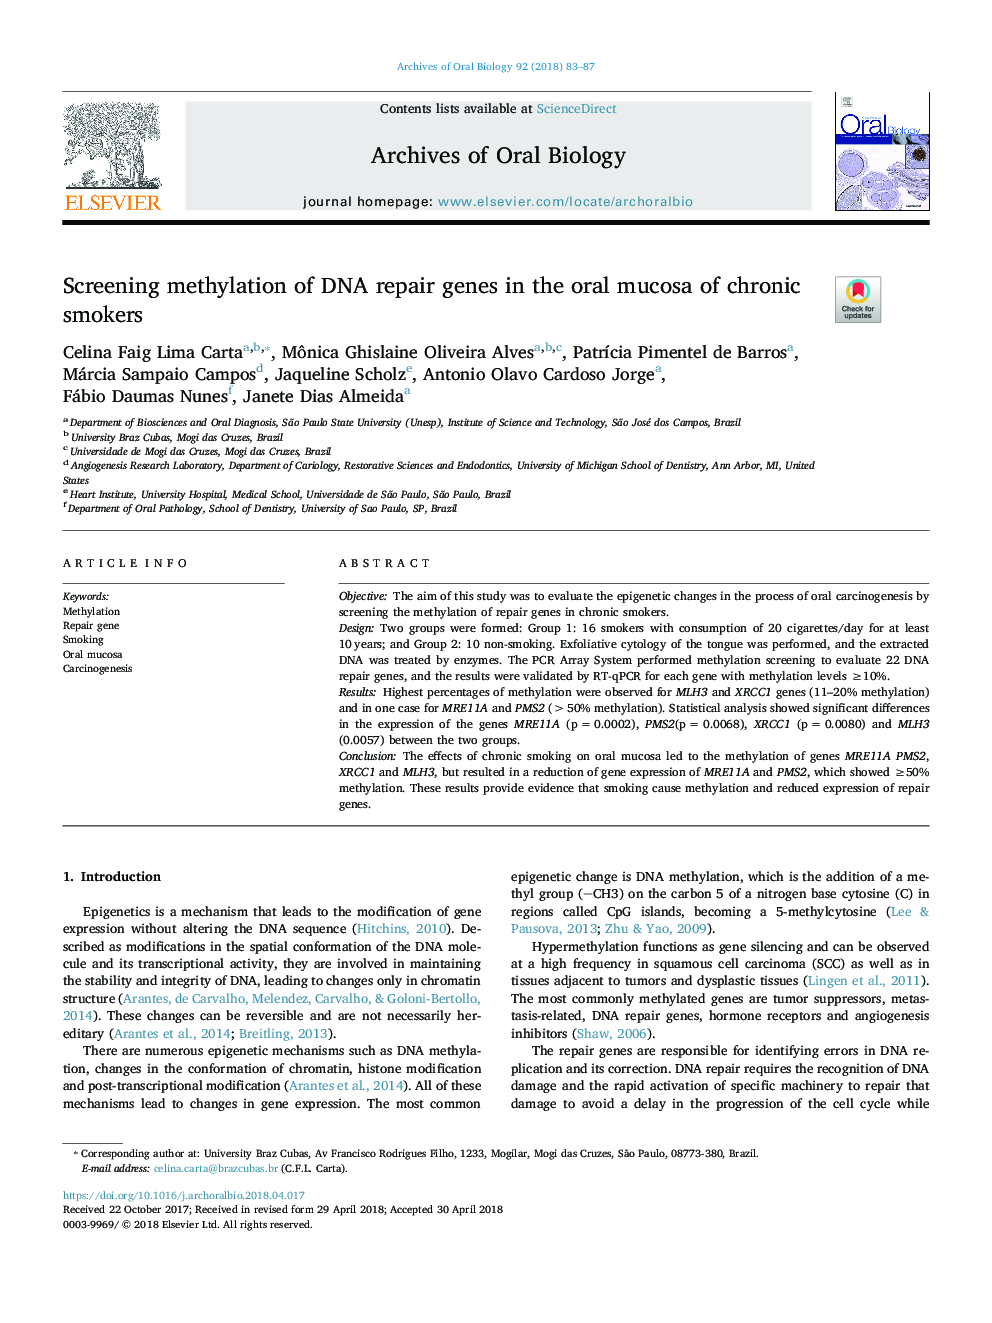 Screening methylation of DNA repair genes in the oral mucosa of chronic smokers